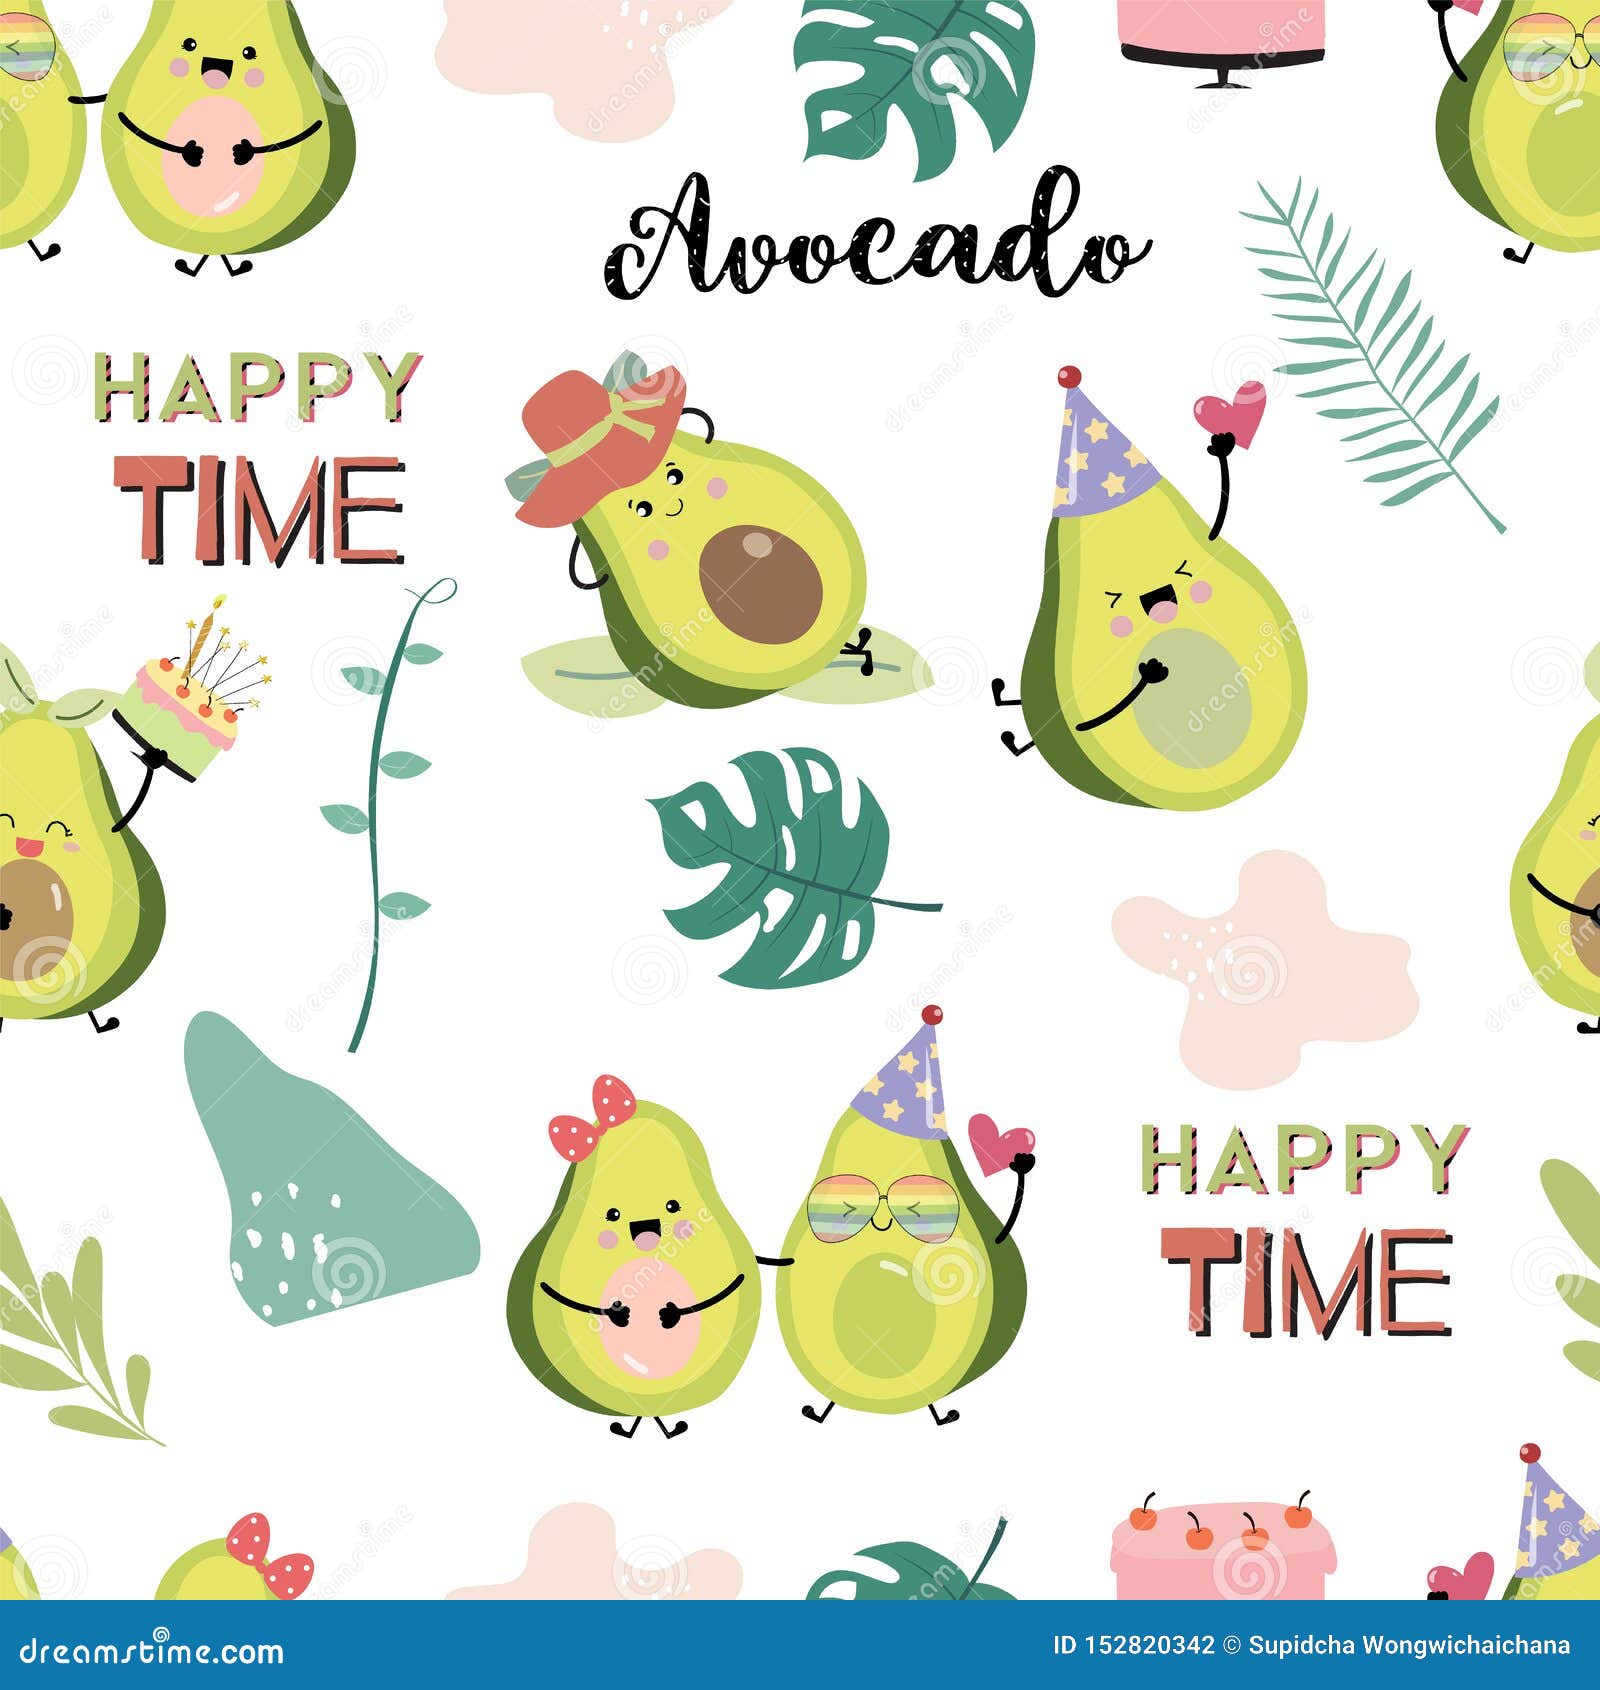 Avocado Cute Wallpaper Vector Images over 510